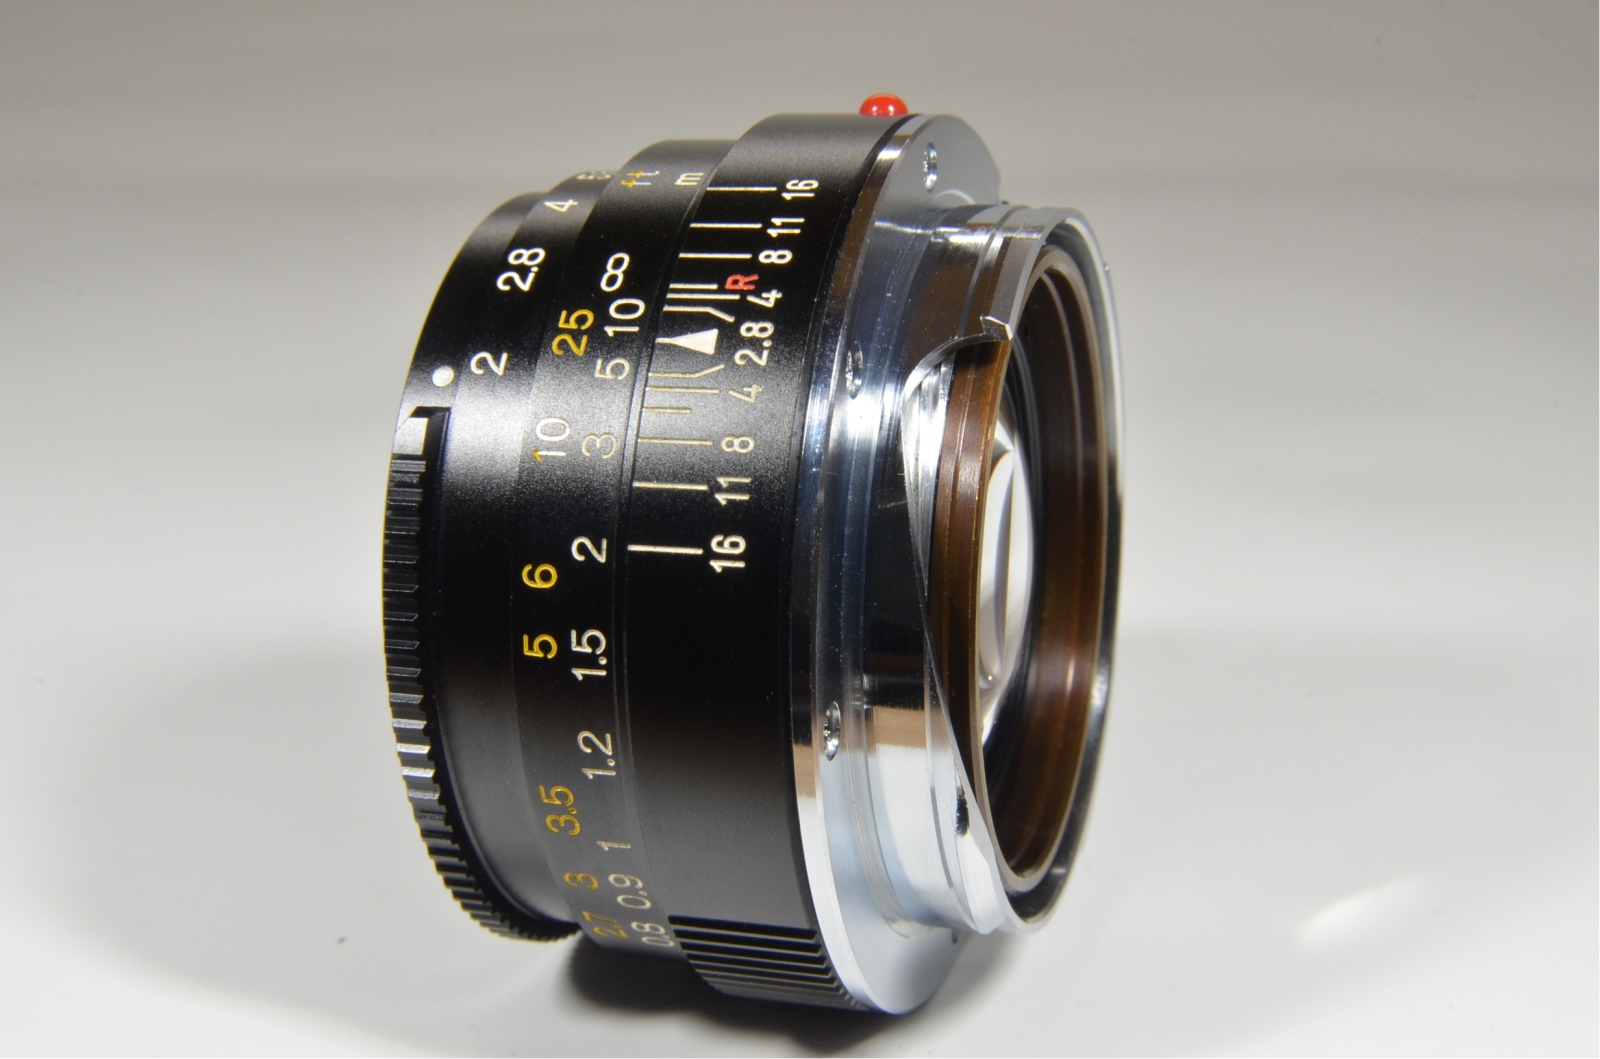 minolta cle film camera w/ m-rokkor 40mm, 28mm, 90mm and flash, film tested